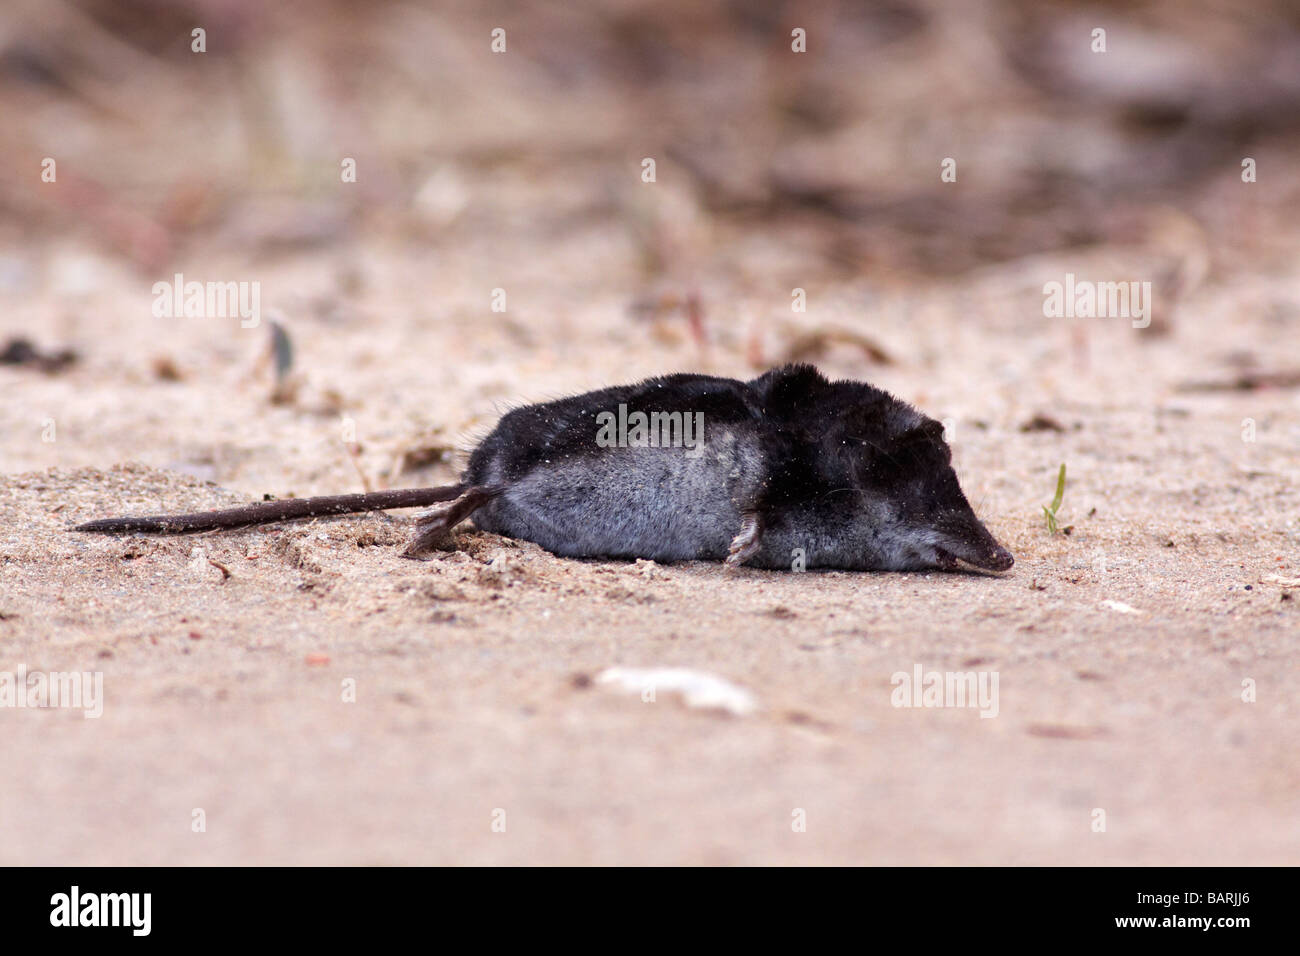 Dead shrew lying on road Stock Photo